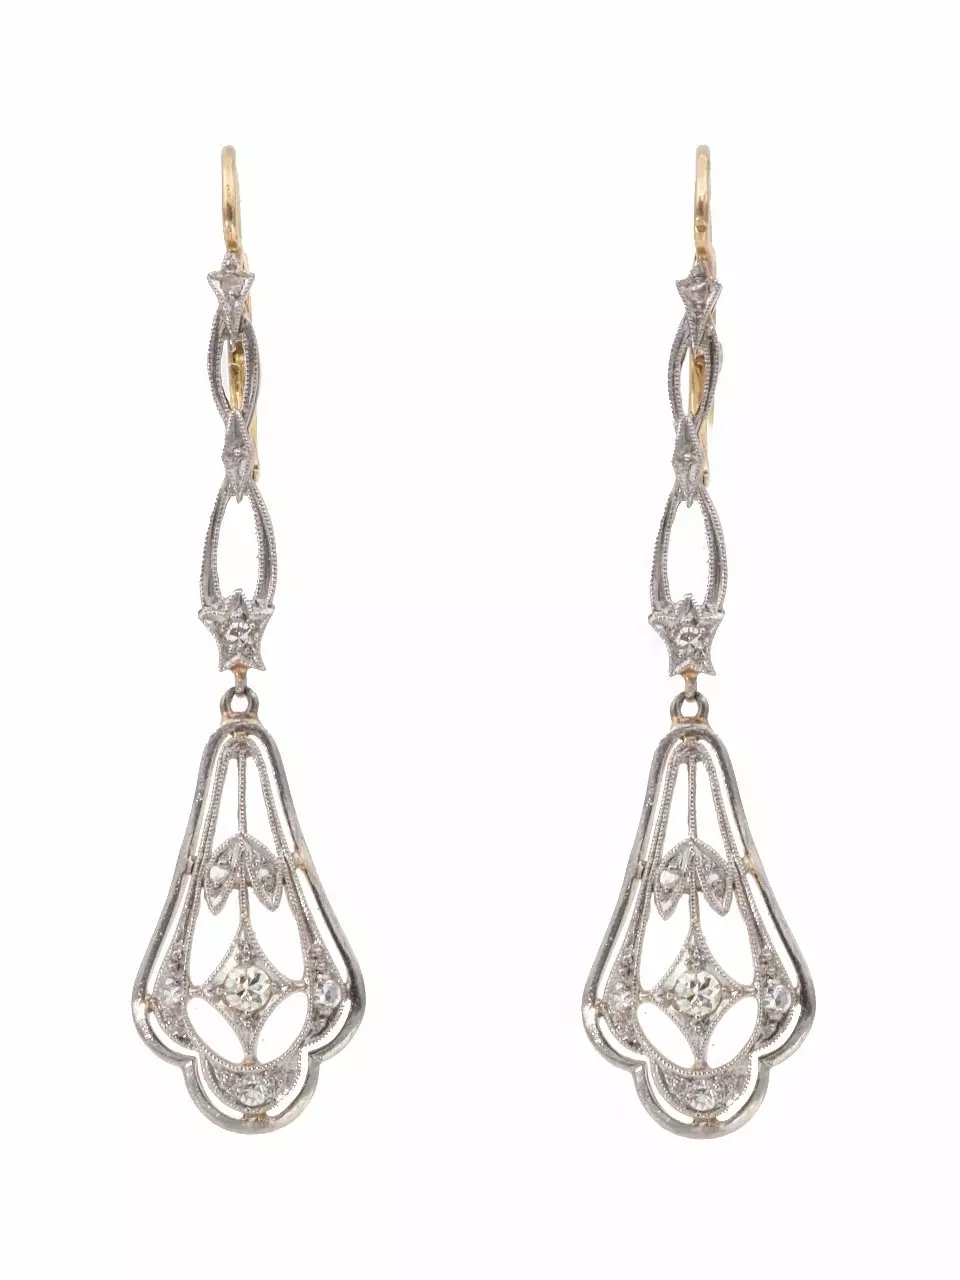 Antieke en Vintage Oorbellen - art nouveau oorhangers diamant